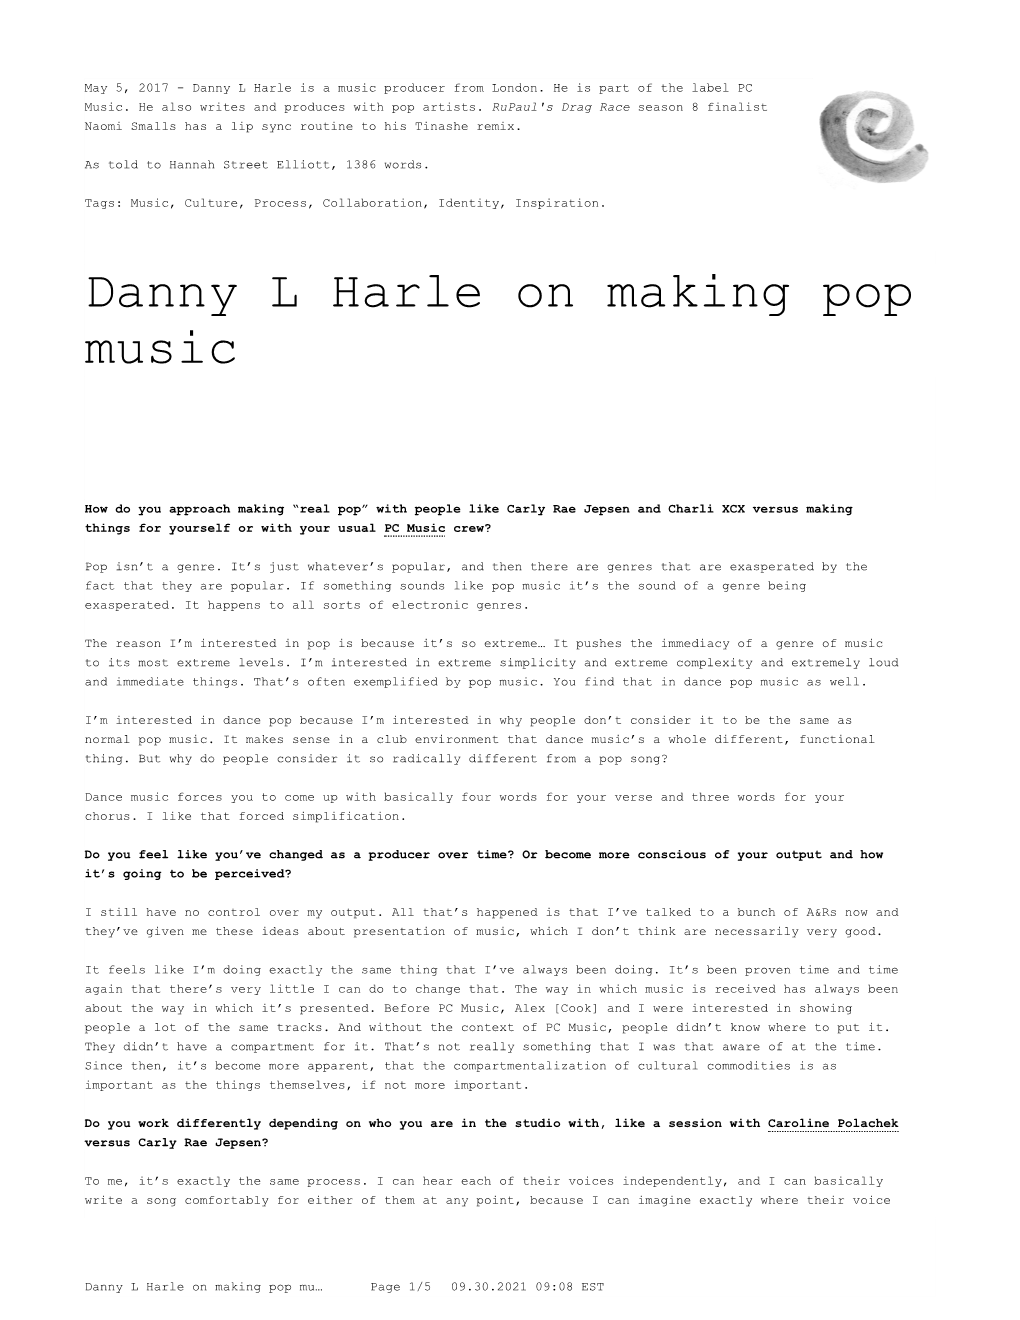 Danny L Harle on Making Pop Music